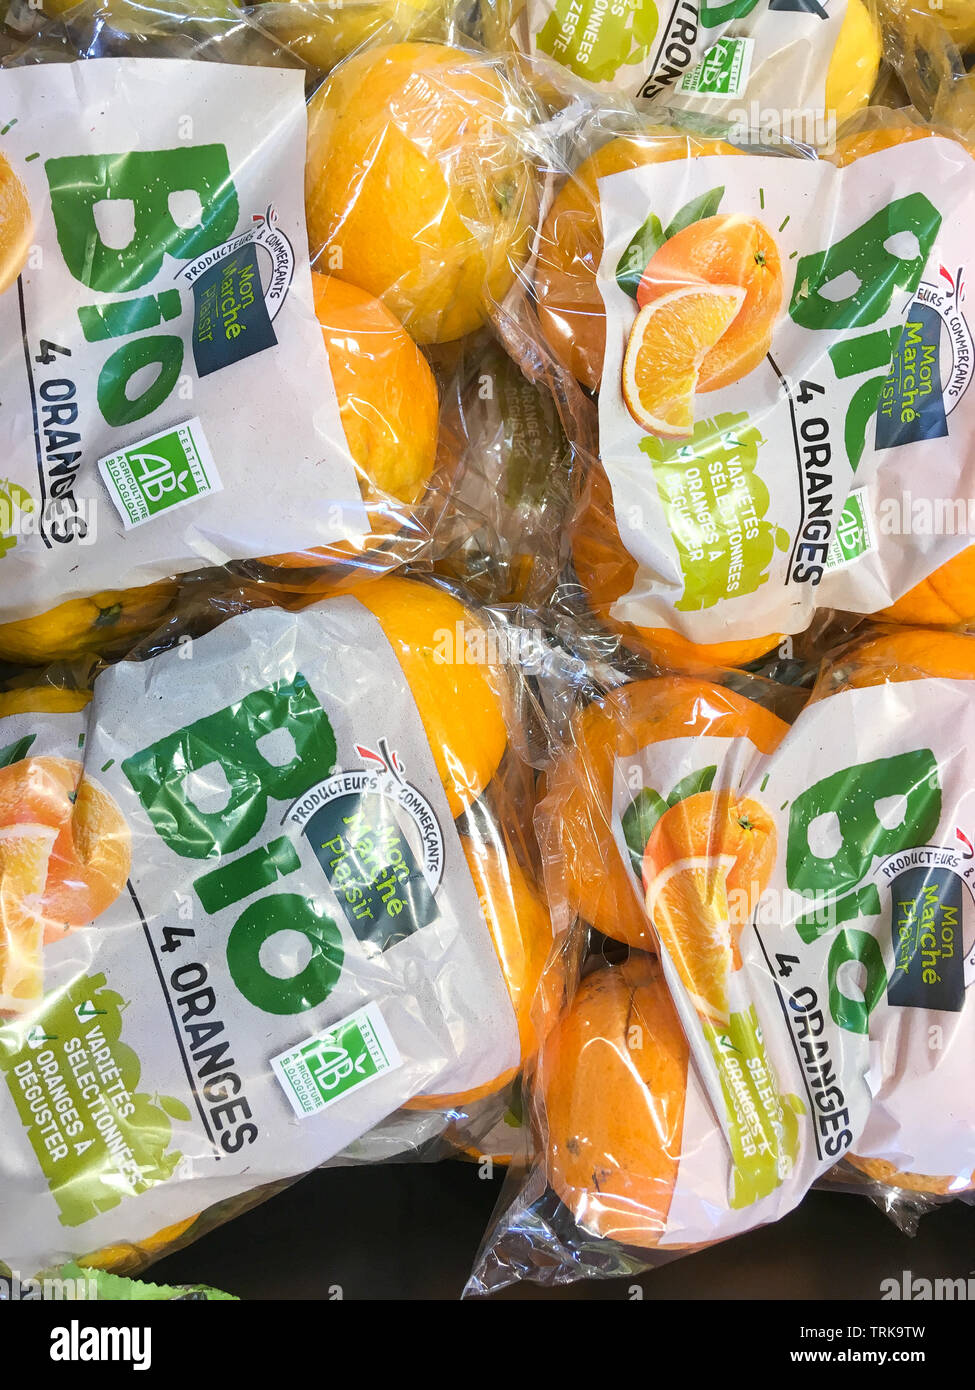 Organic oranges packaged in plastic blister packs, France Stock Photo